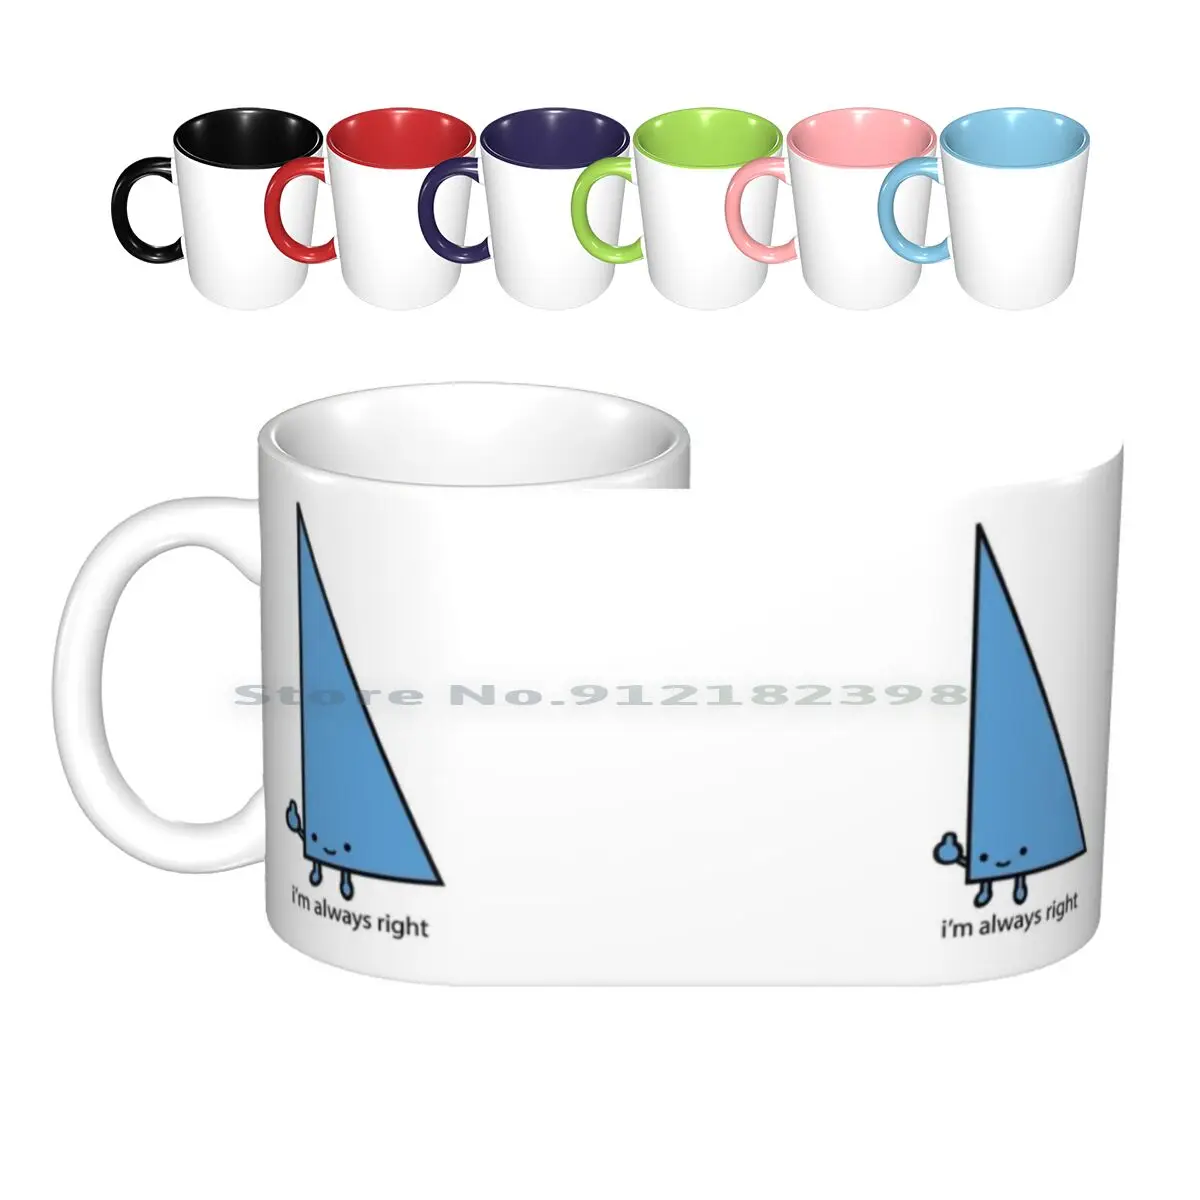 

Always Right Ceramic Mugs Coffee Cups Milk Tea Mug Math Right Teacher Always School Student Major Class Classroom Angle Humor